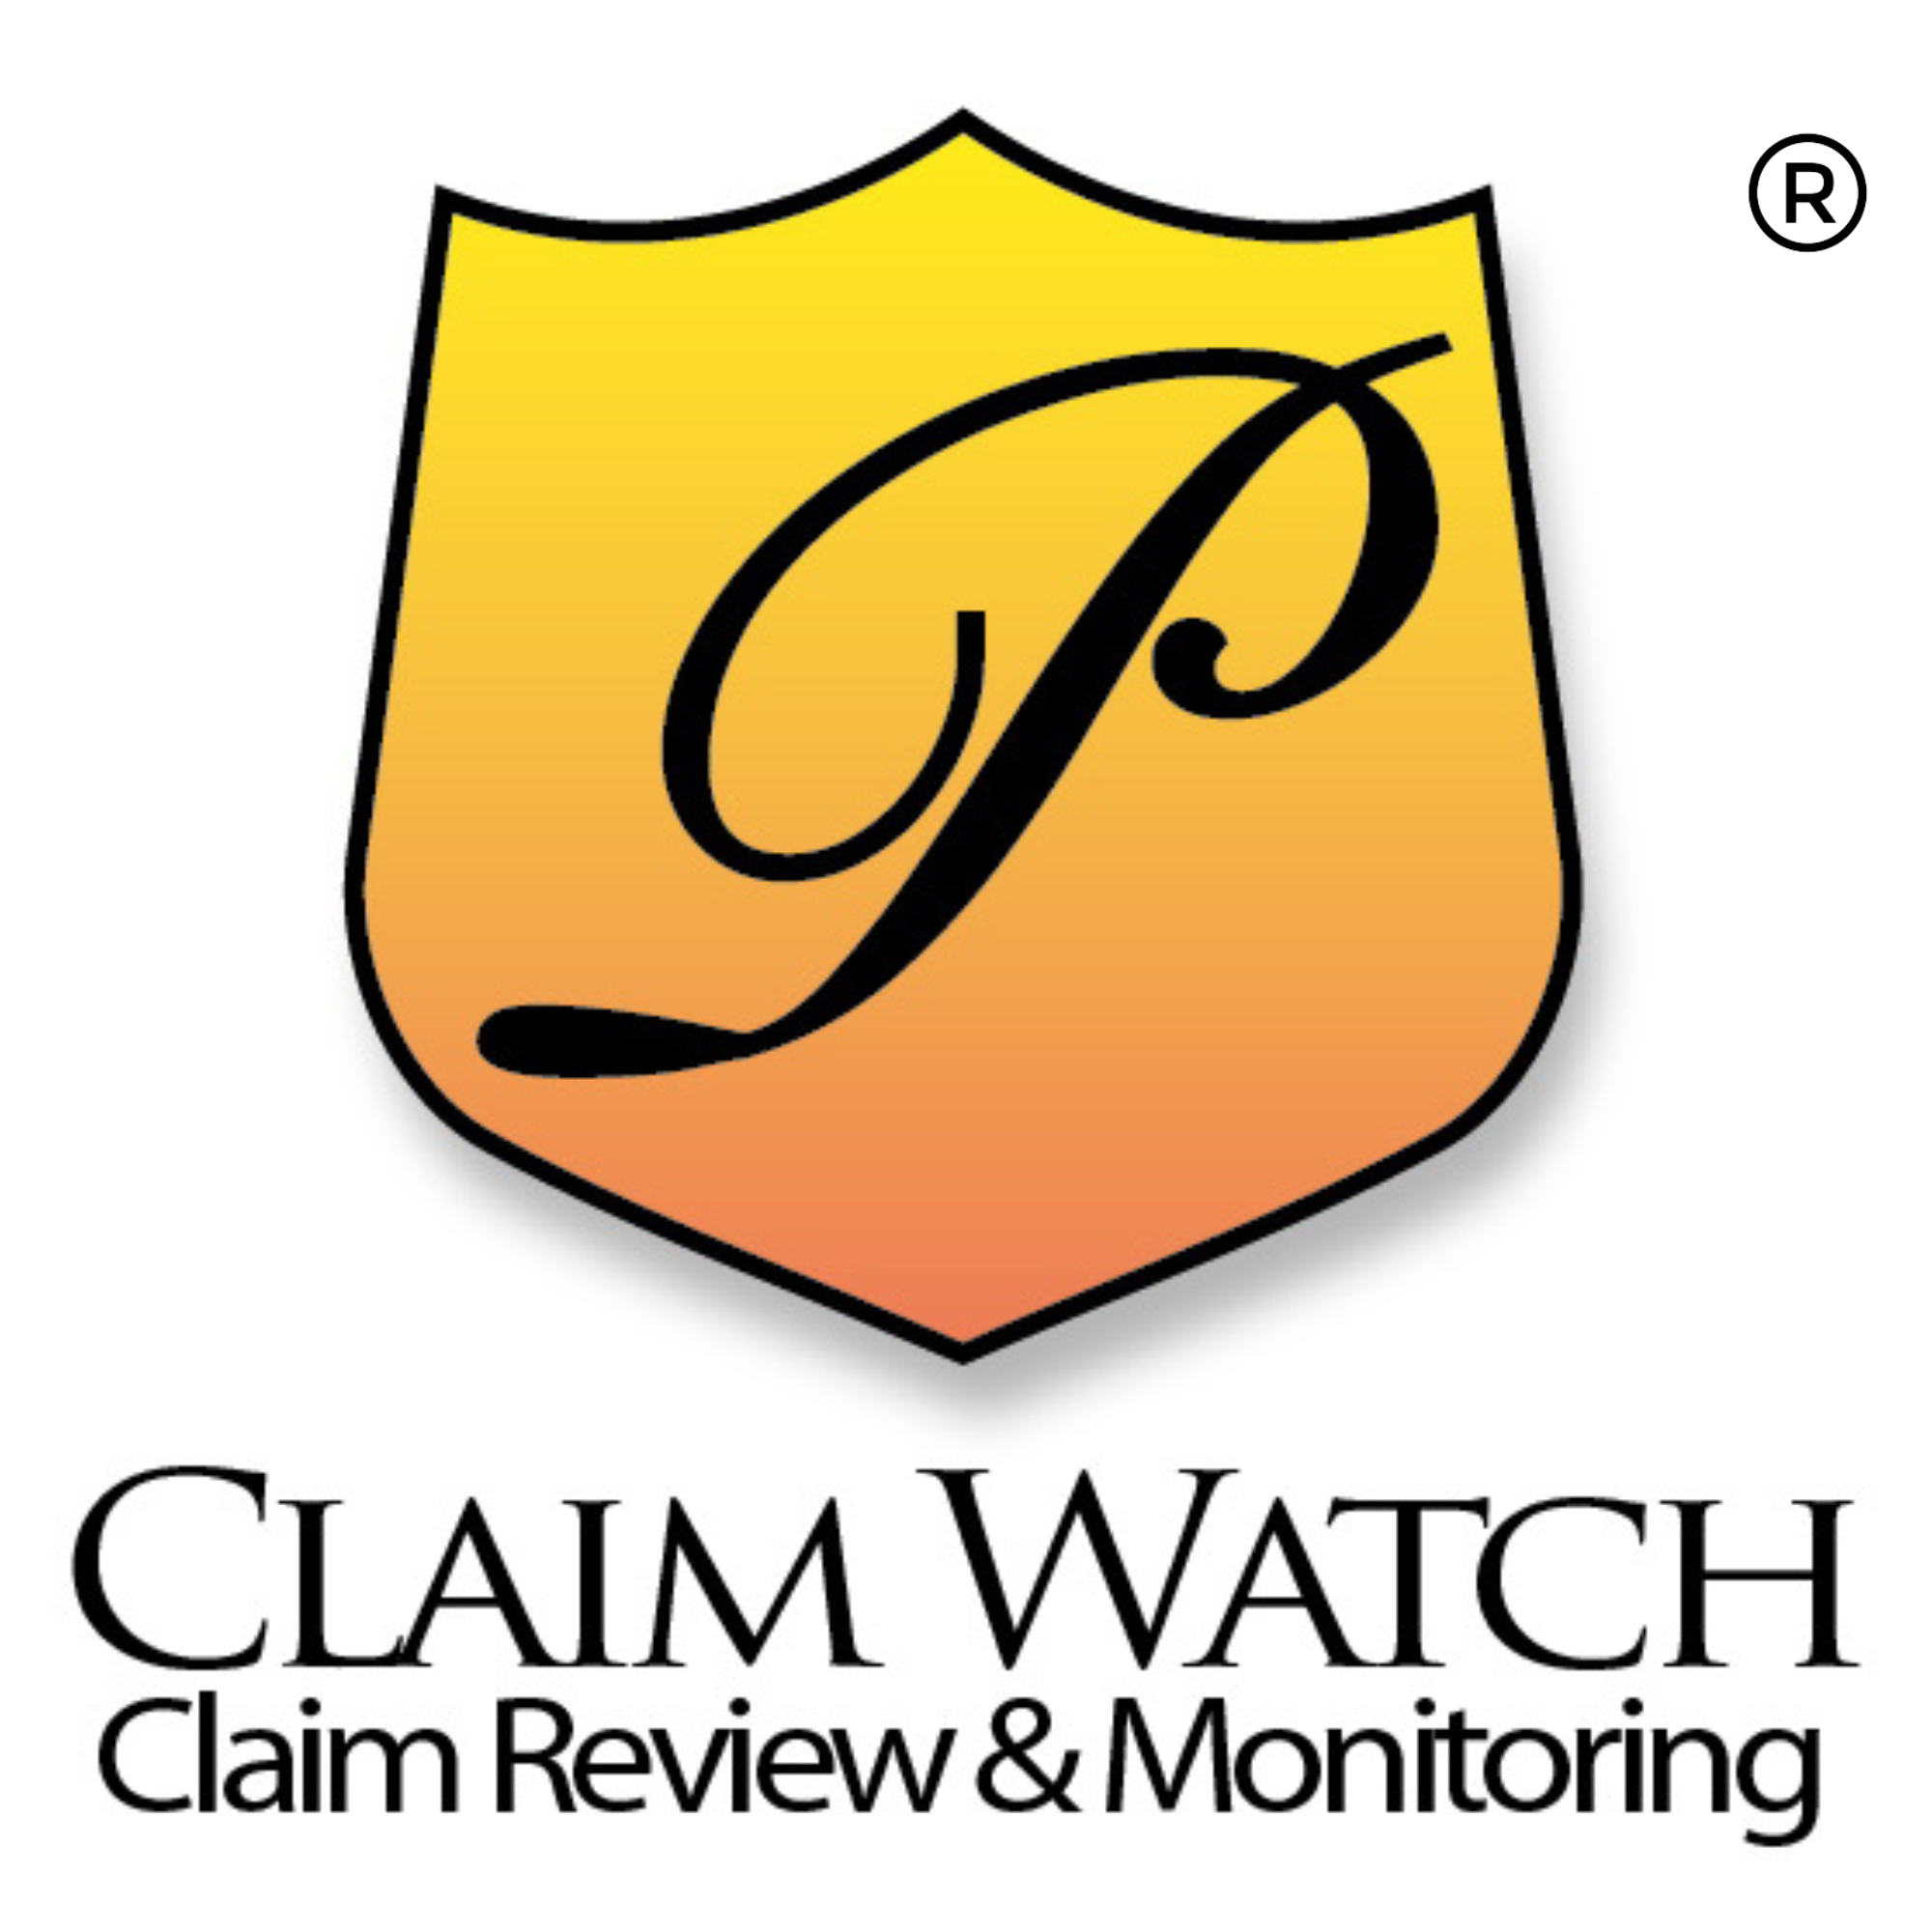 Claim Watch Claim Review & Monitoring logo